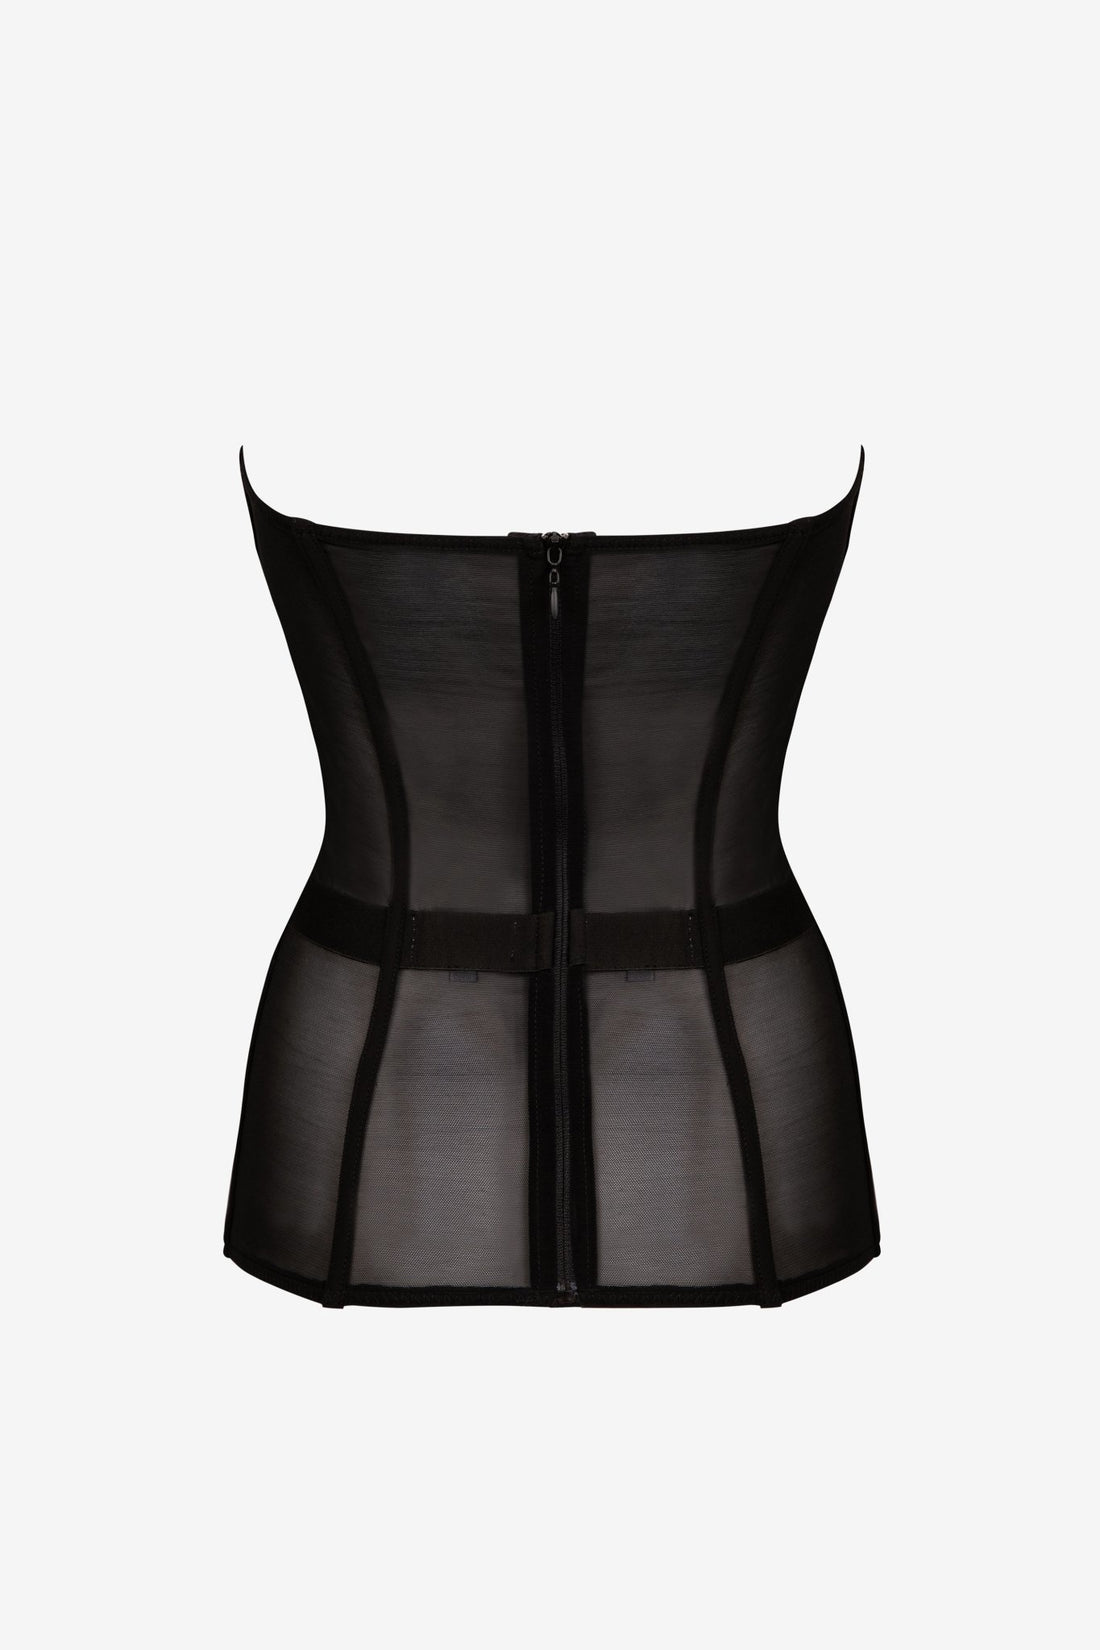 Parisian Tall mesh corset top in black